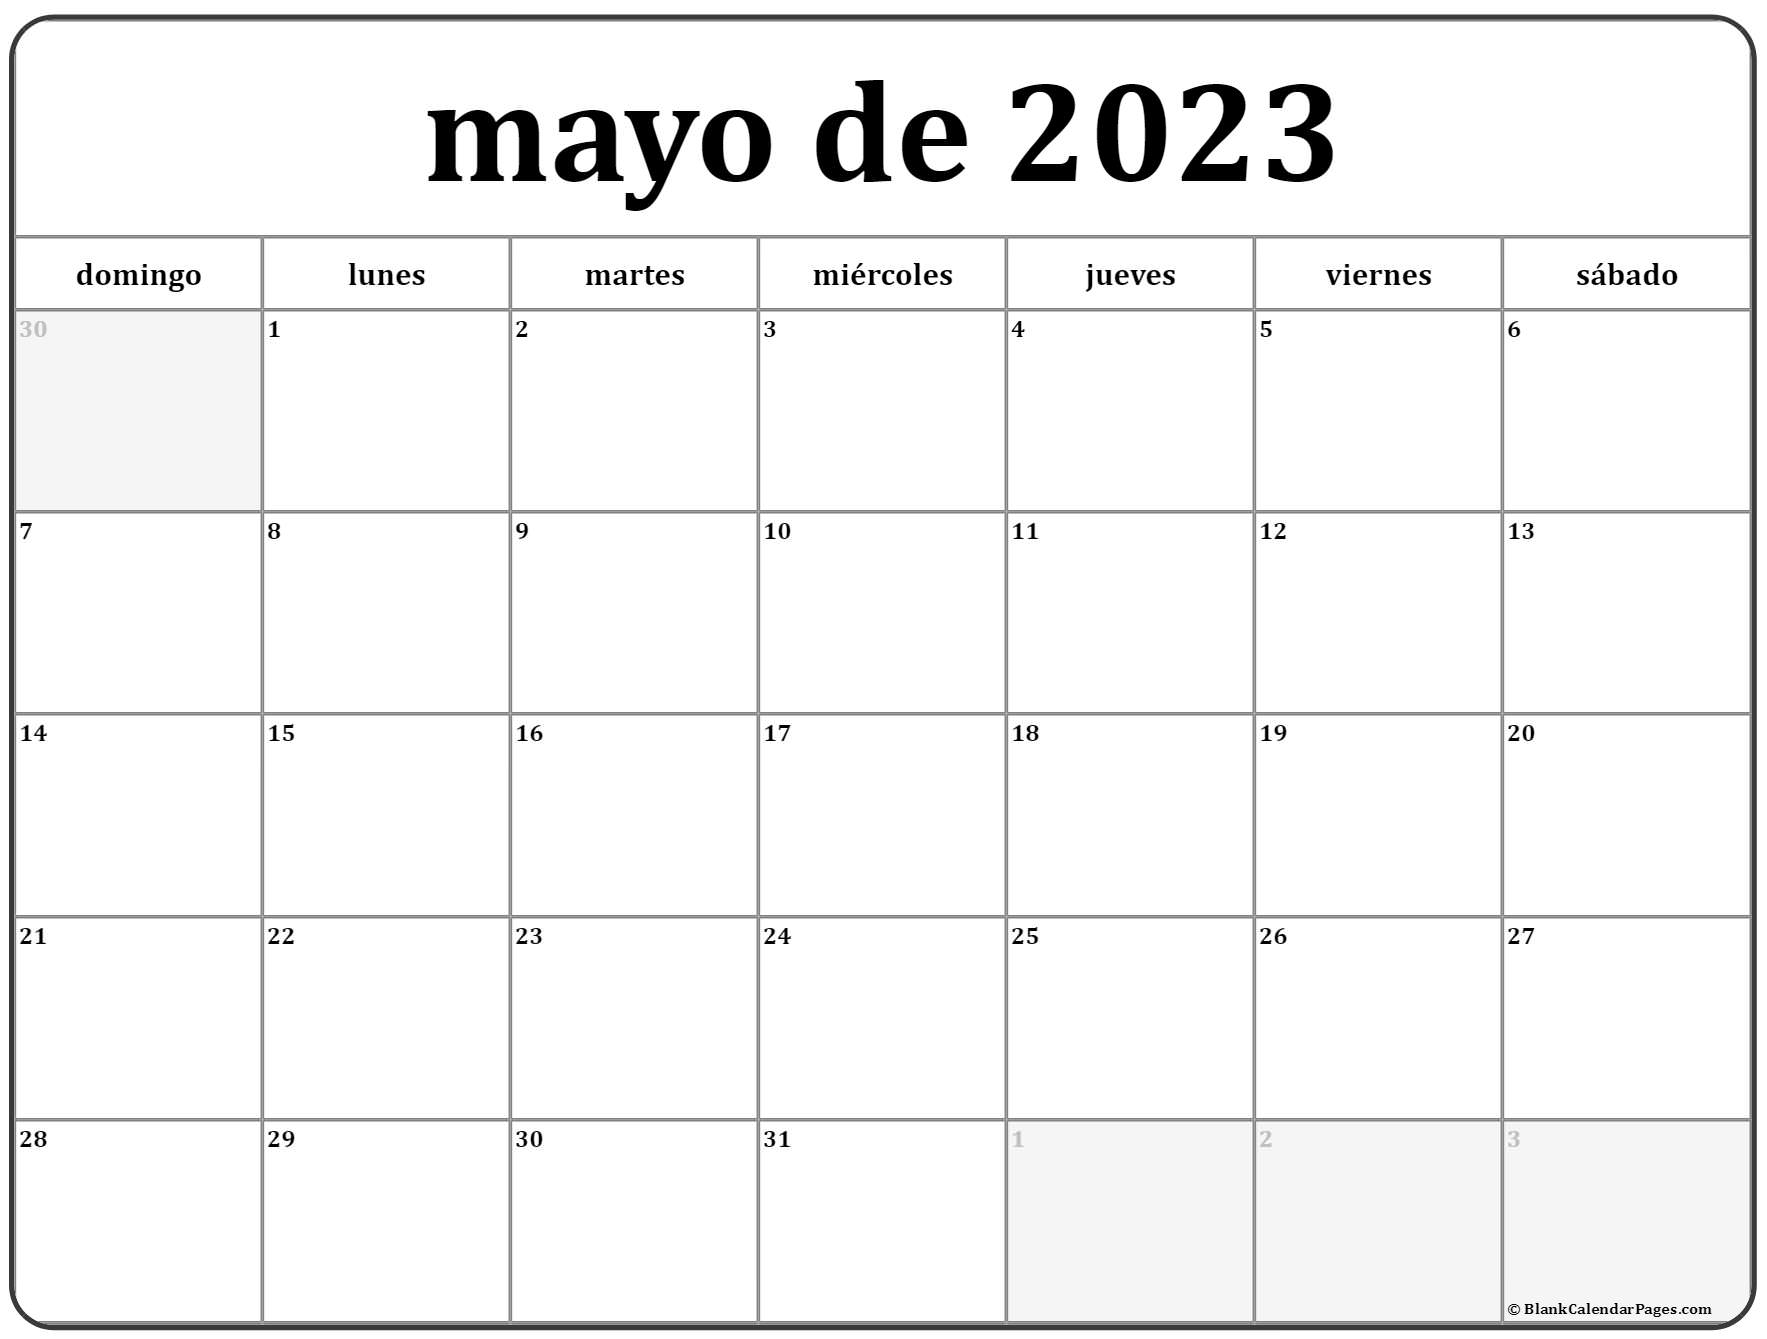 Calendario De 2023 Mayo mayo de 2023 calendario gratis | Calendario mayo